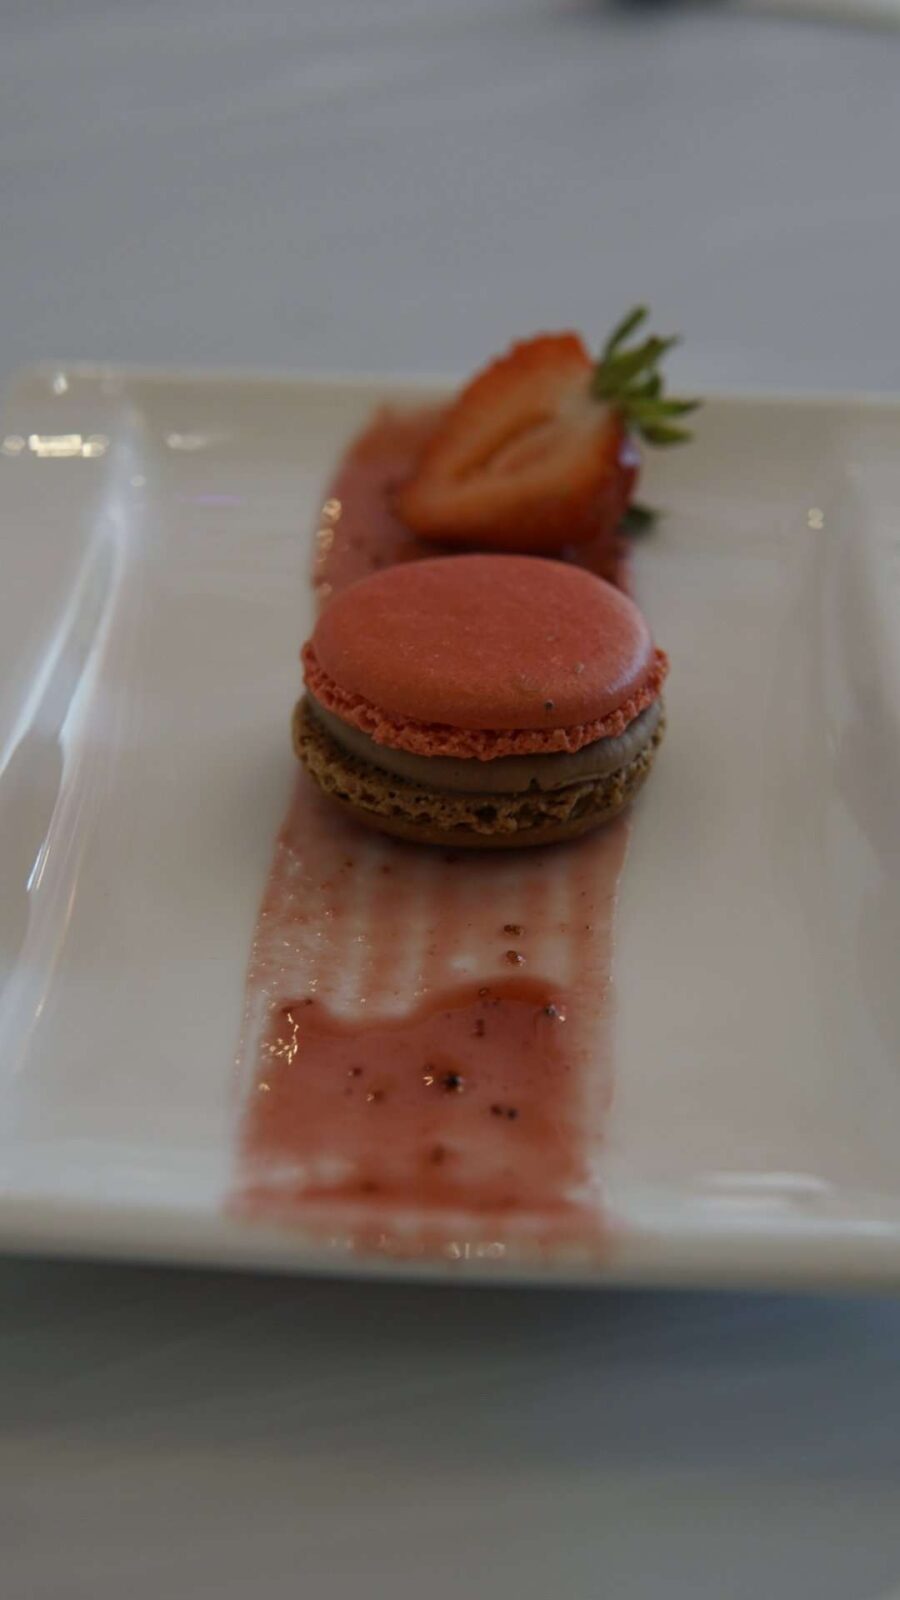 Strawberry sliced with macaron